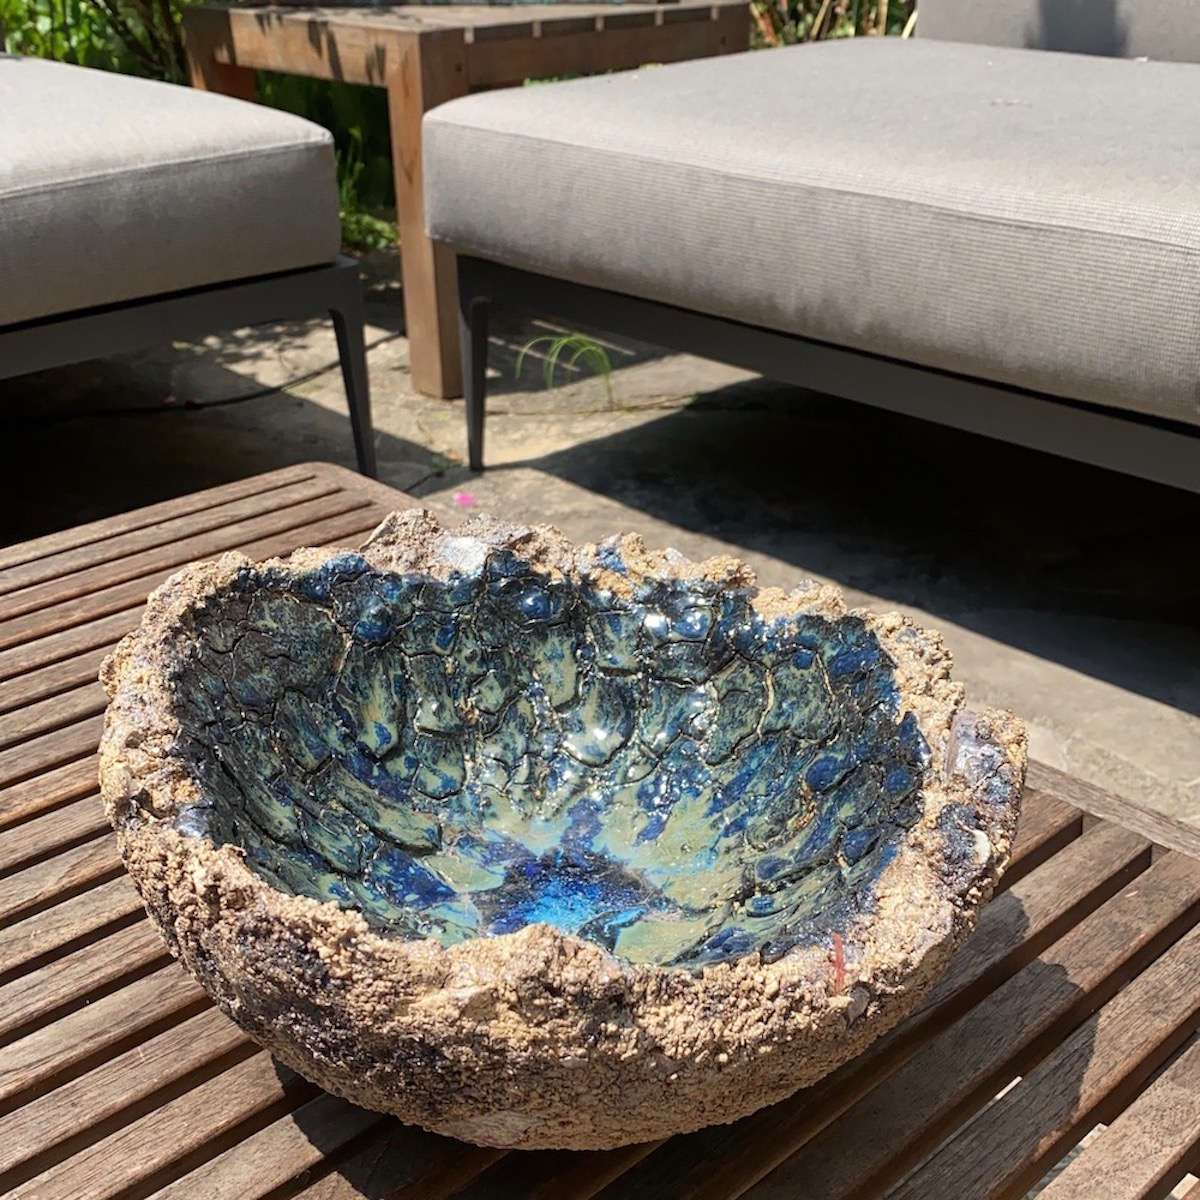 ceramic ornamental bowl on table